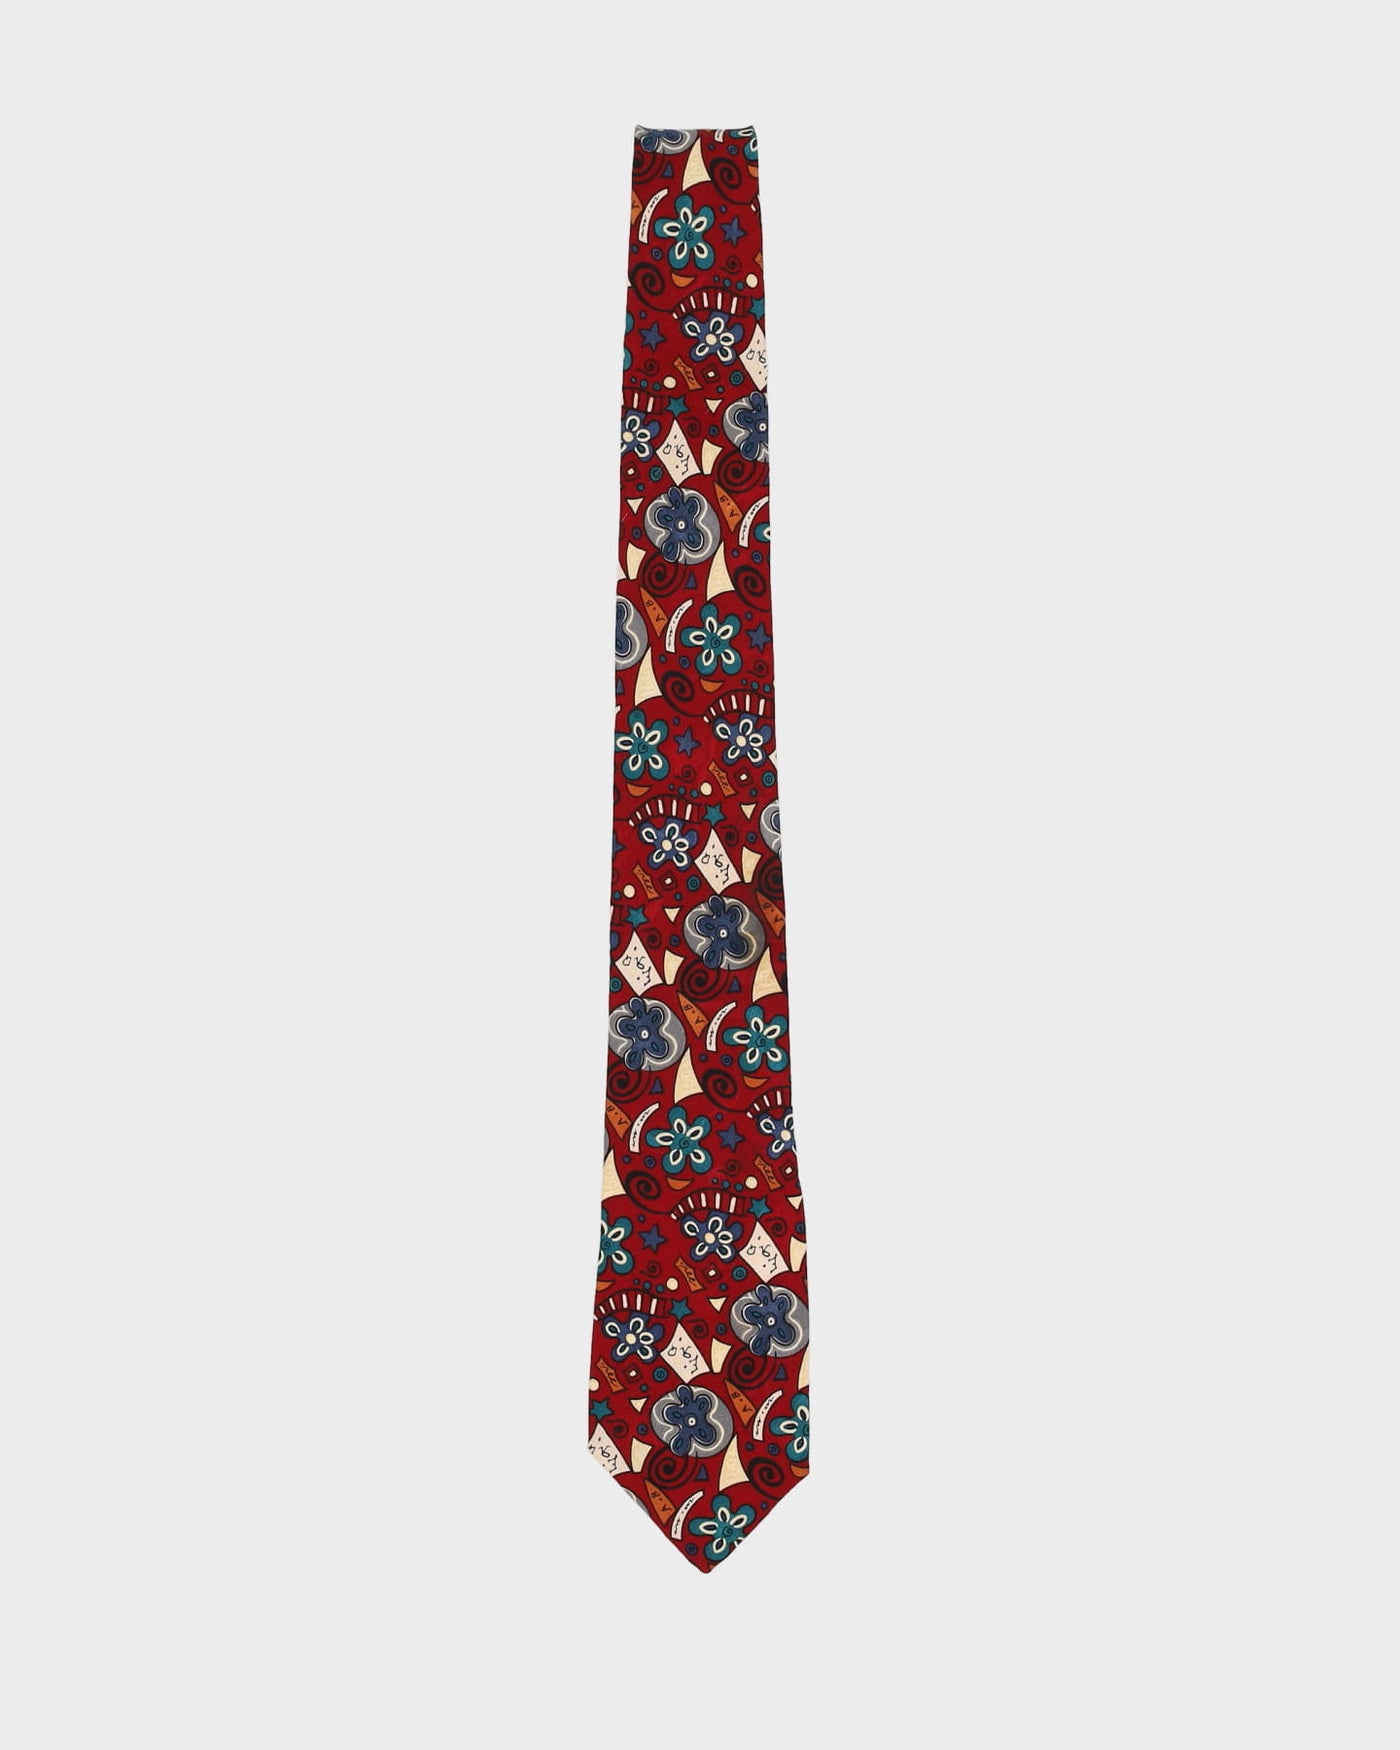 Vintage 90s Christian Dior Dark Red Patterned Tie